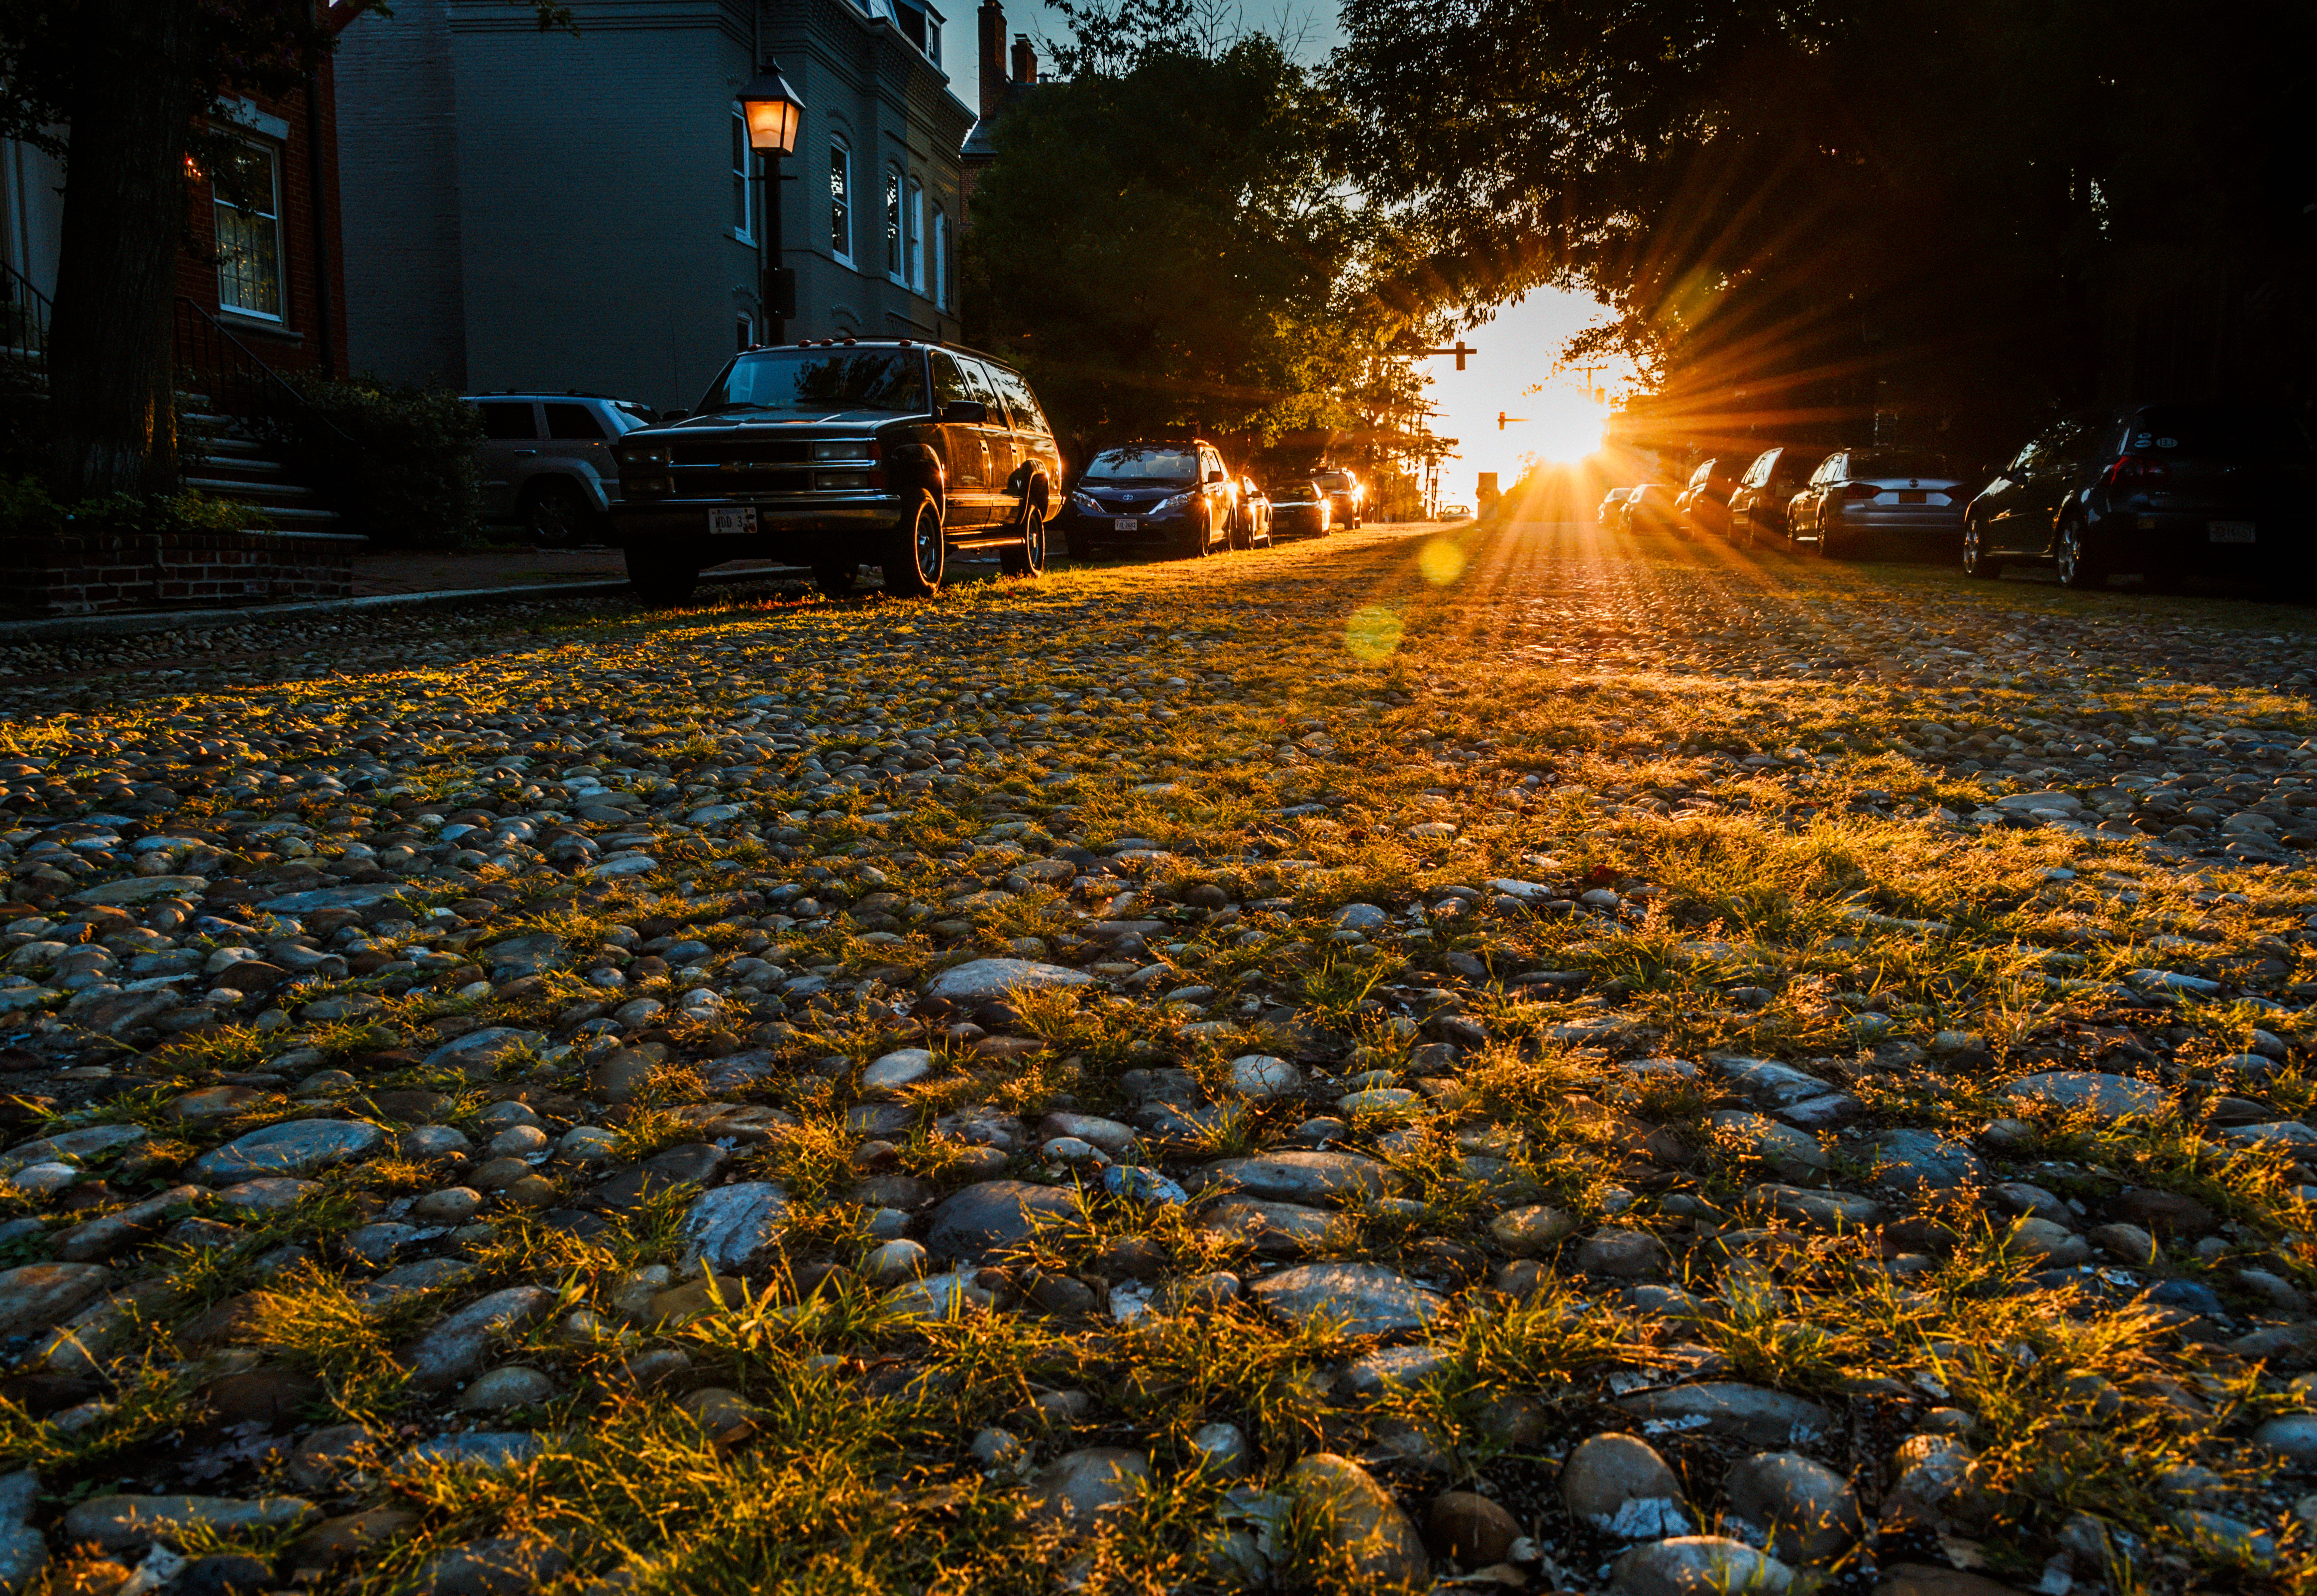 General 4656x3208 Alexandria, VA sunset cobblestone street road grass sunlight car house trees